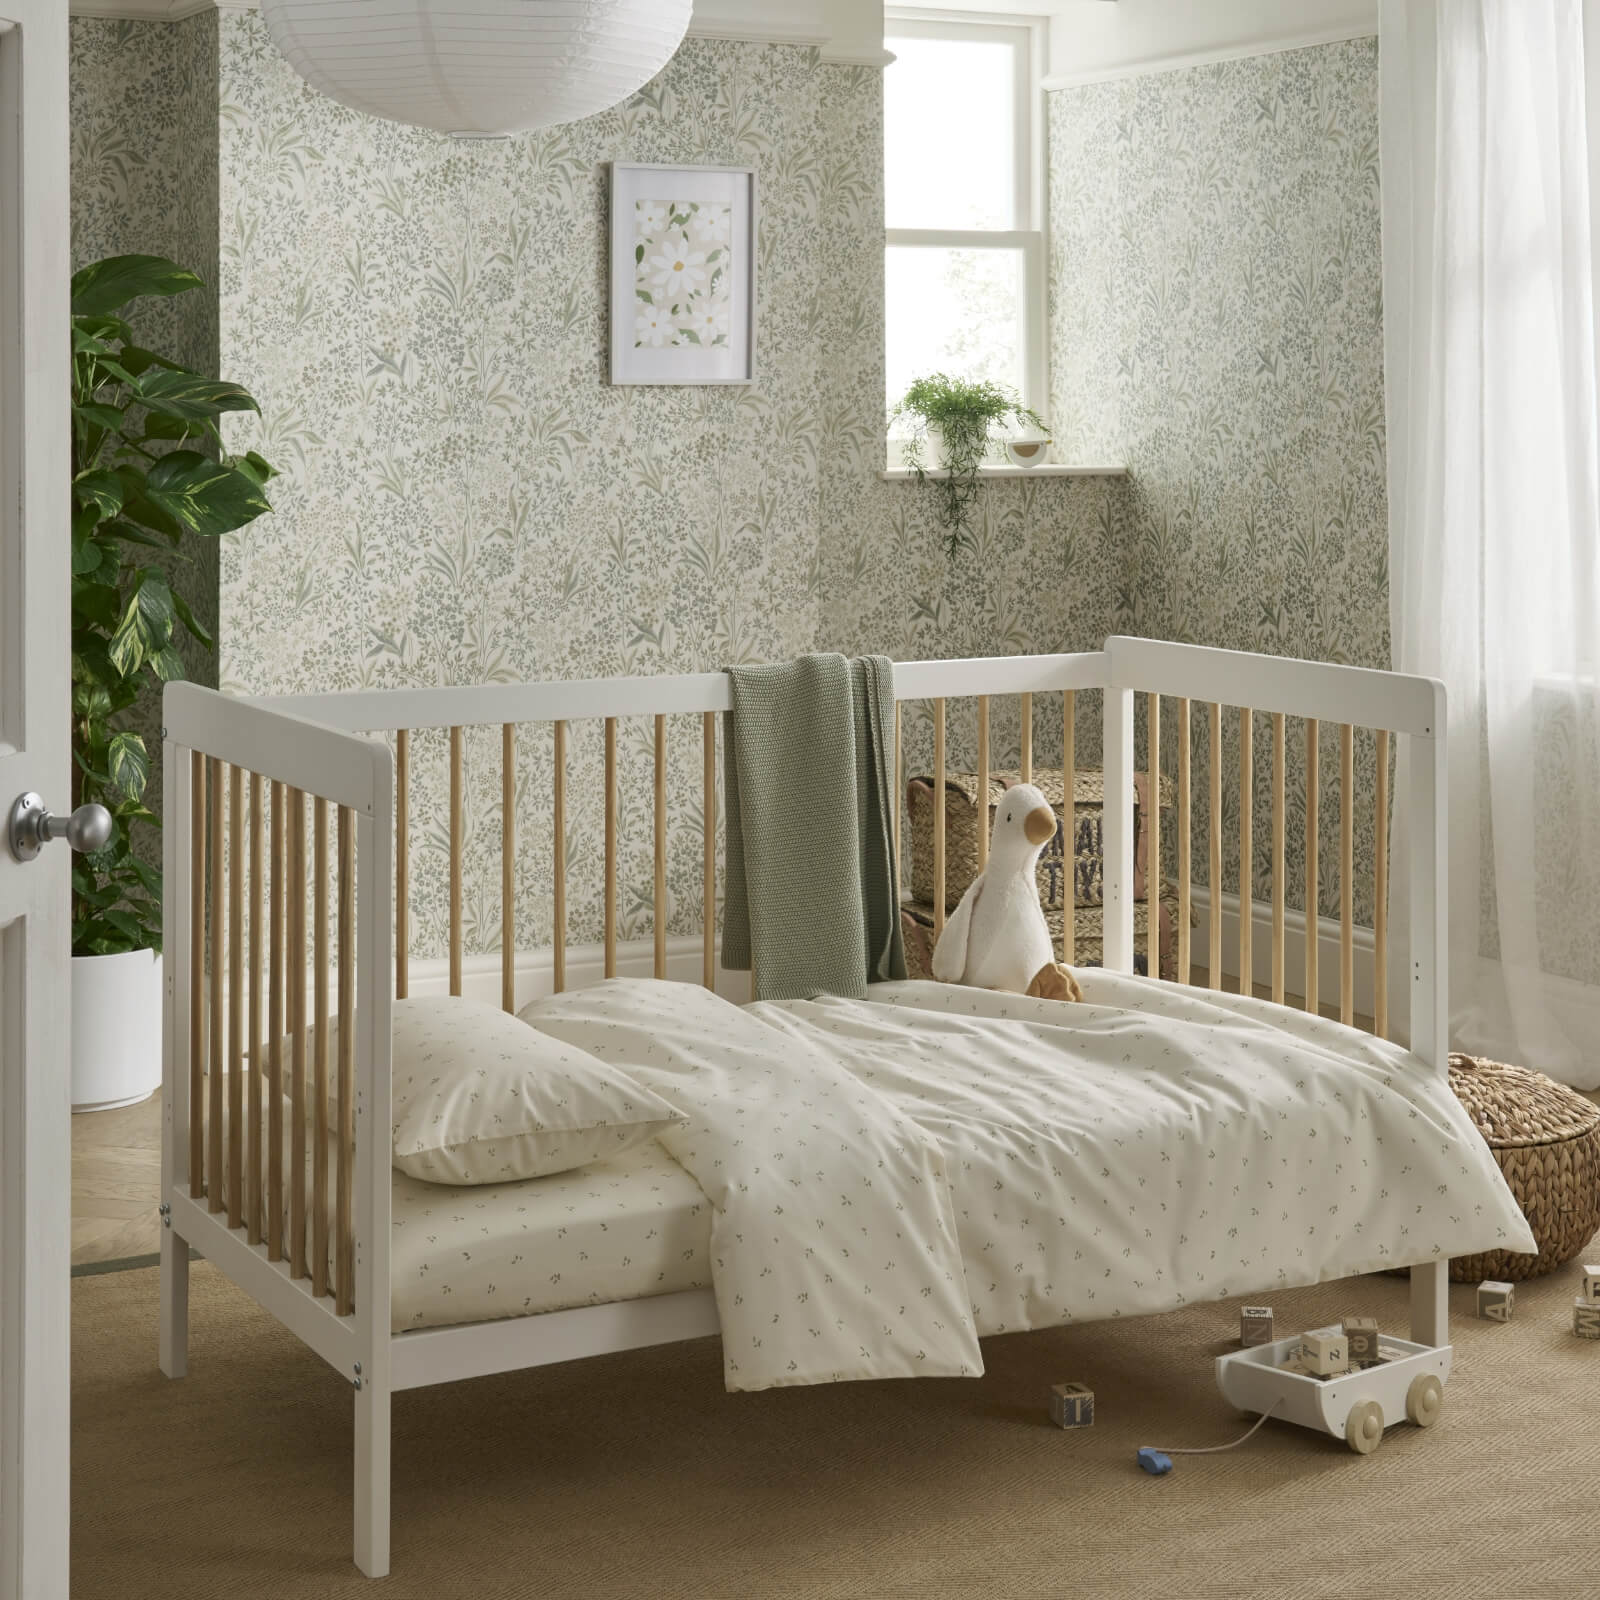 CuddleCo Nola 3 Piece Room Set in White & Natural Nursery Room Sets